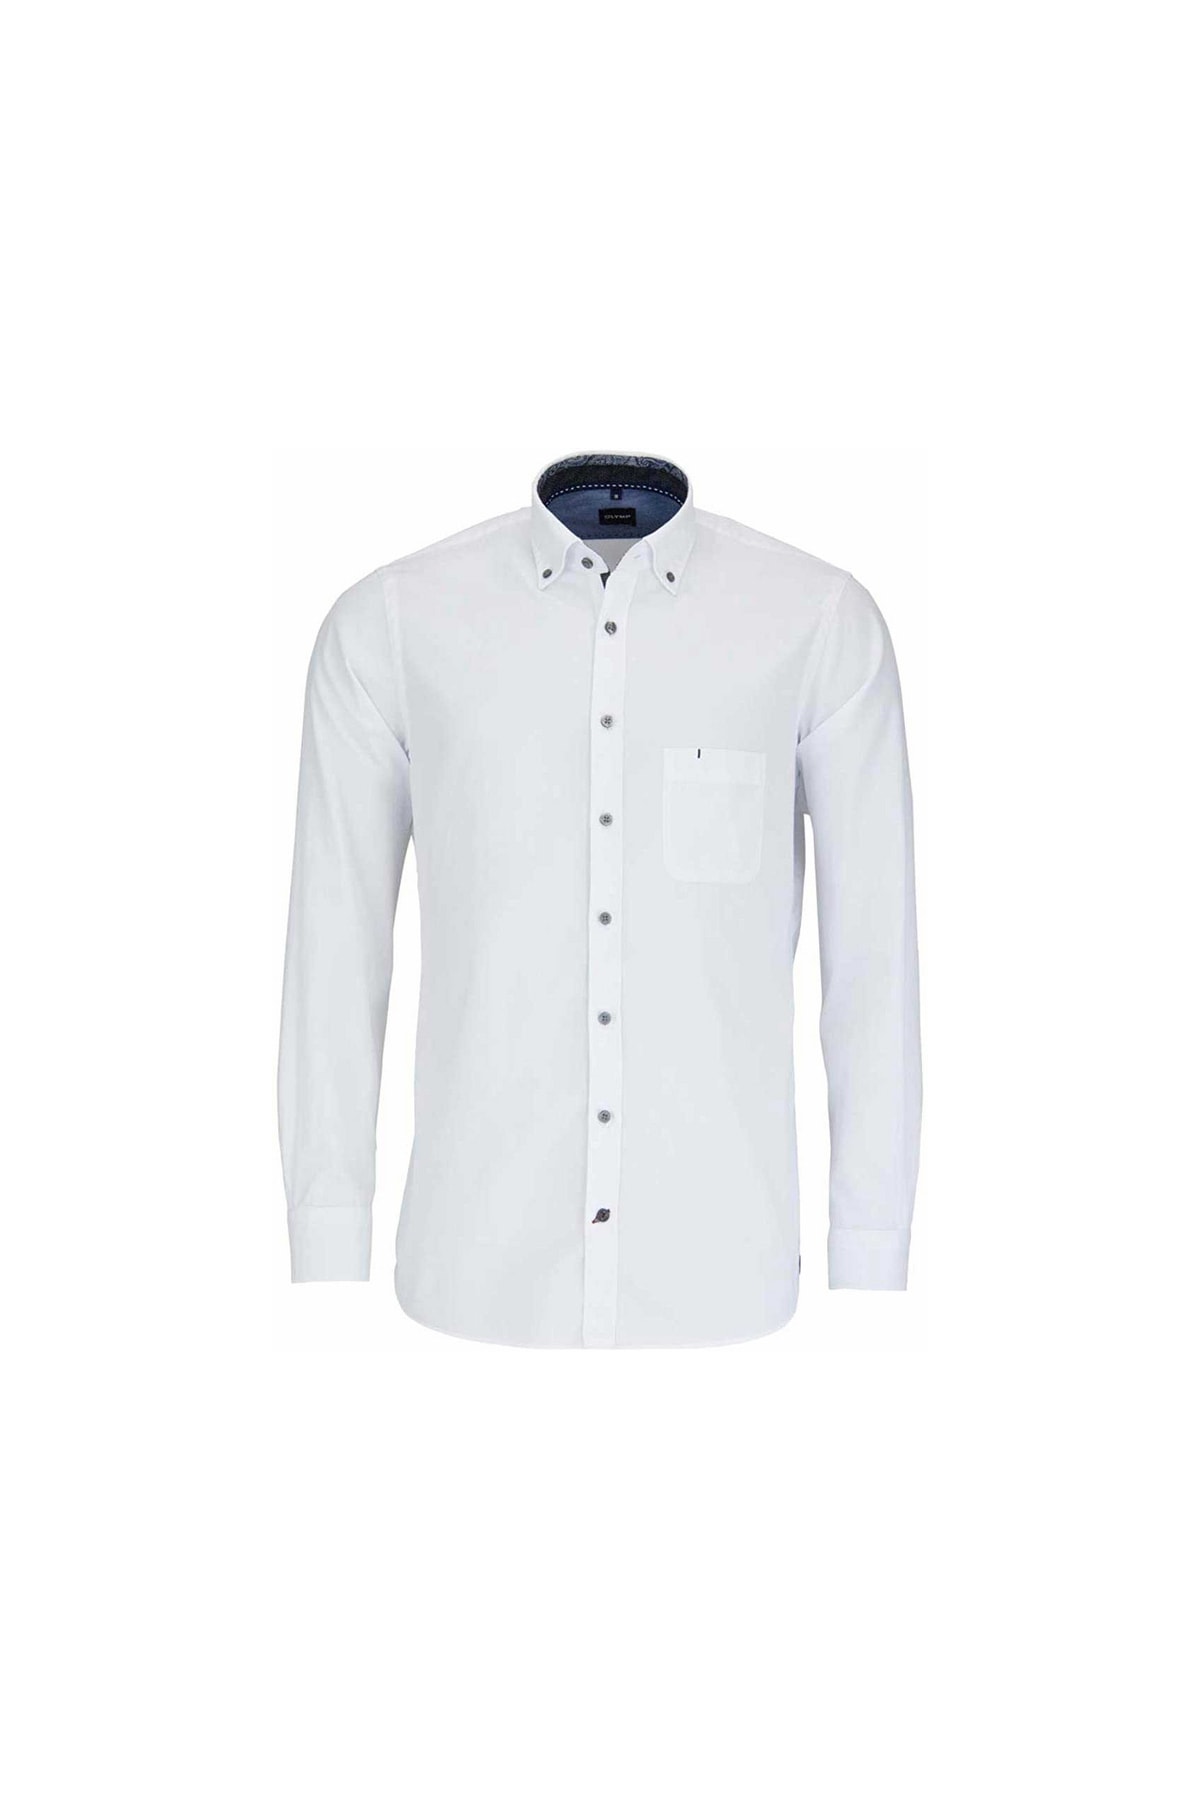 OLYMP Hemd Weiß Regular Fit Fast ausverkauft